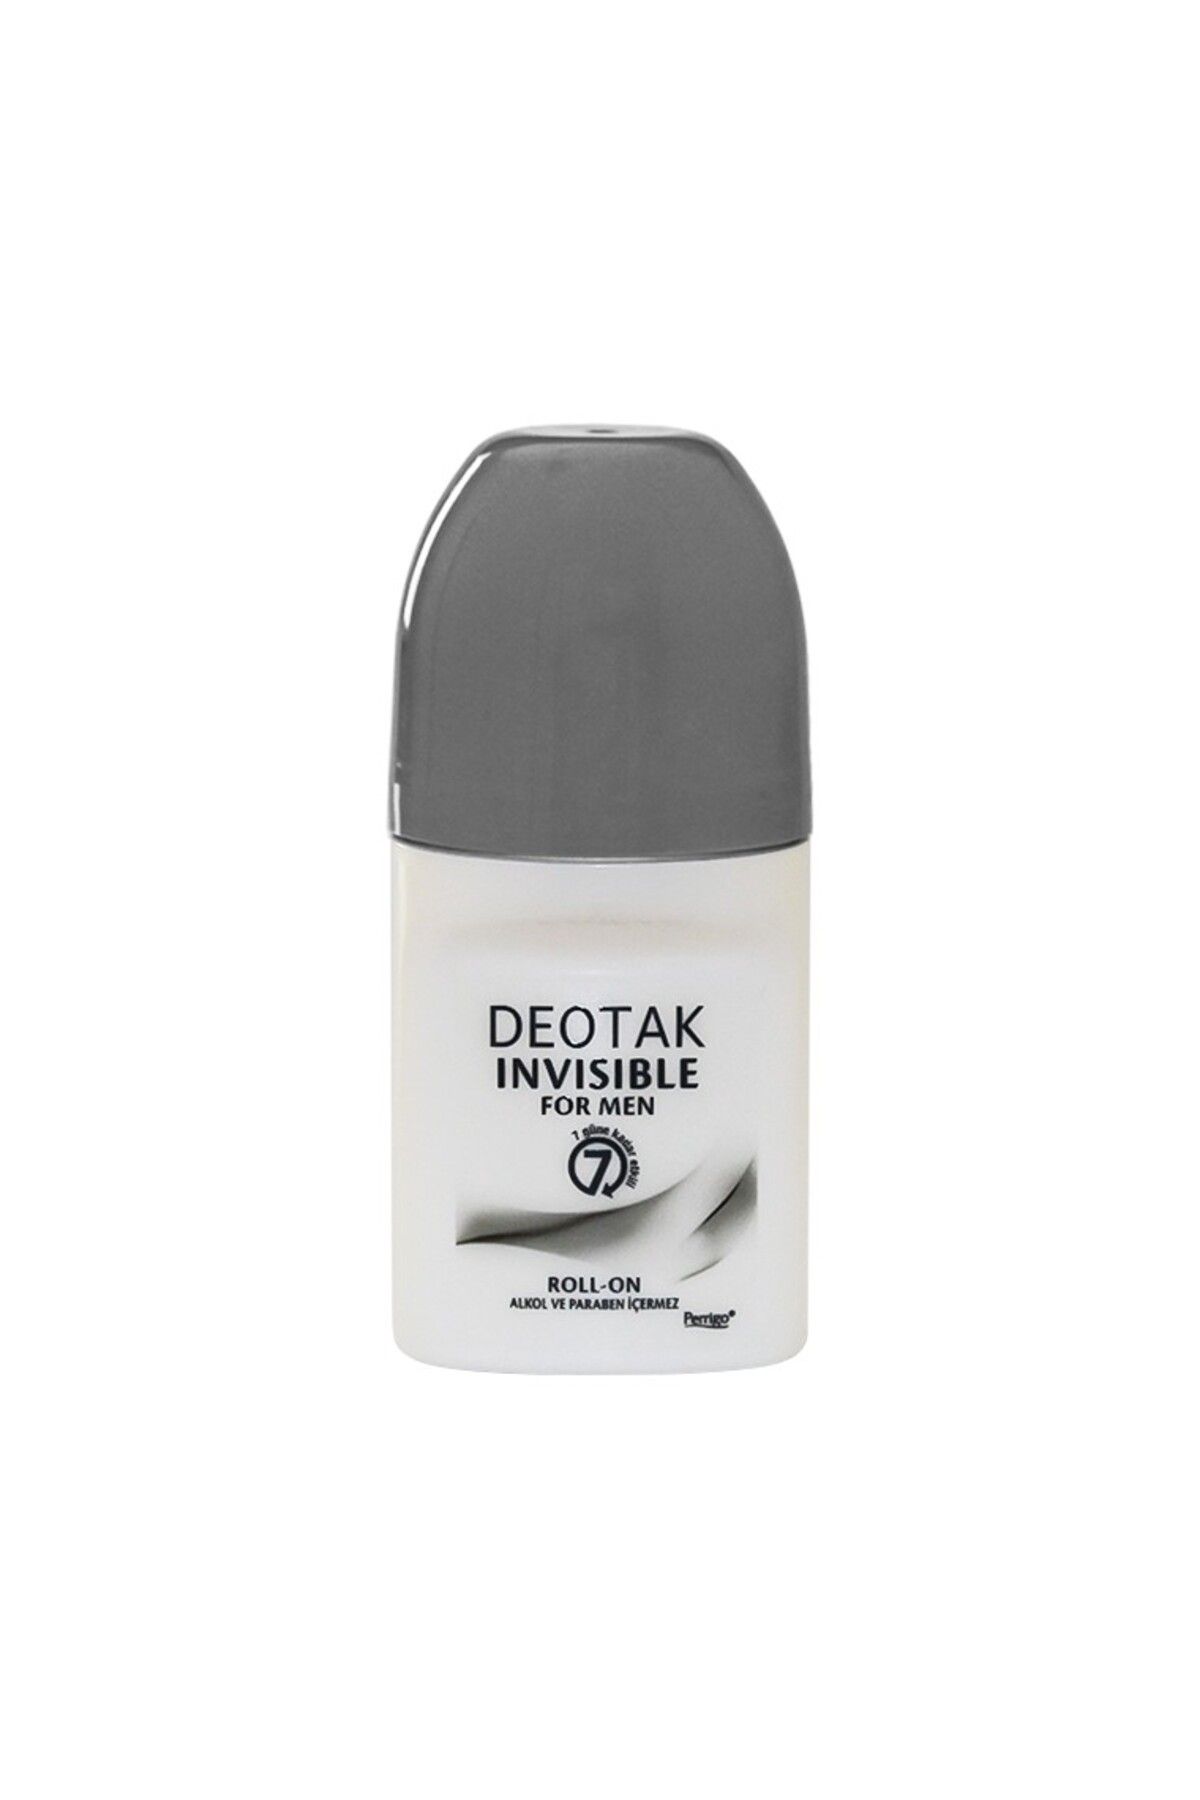 Deotak Invisible For Men Roll-on Deodorant 35 ml